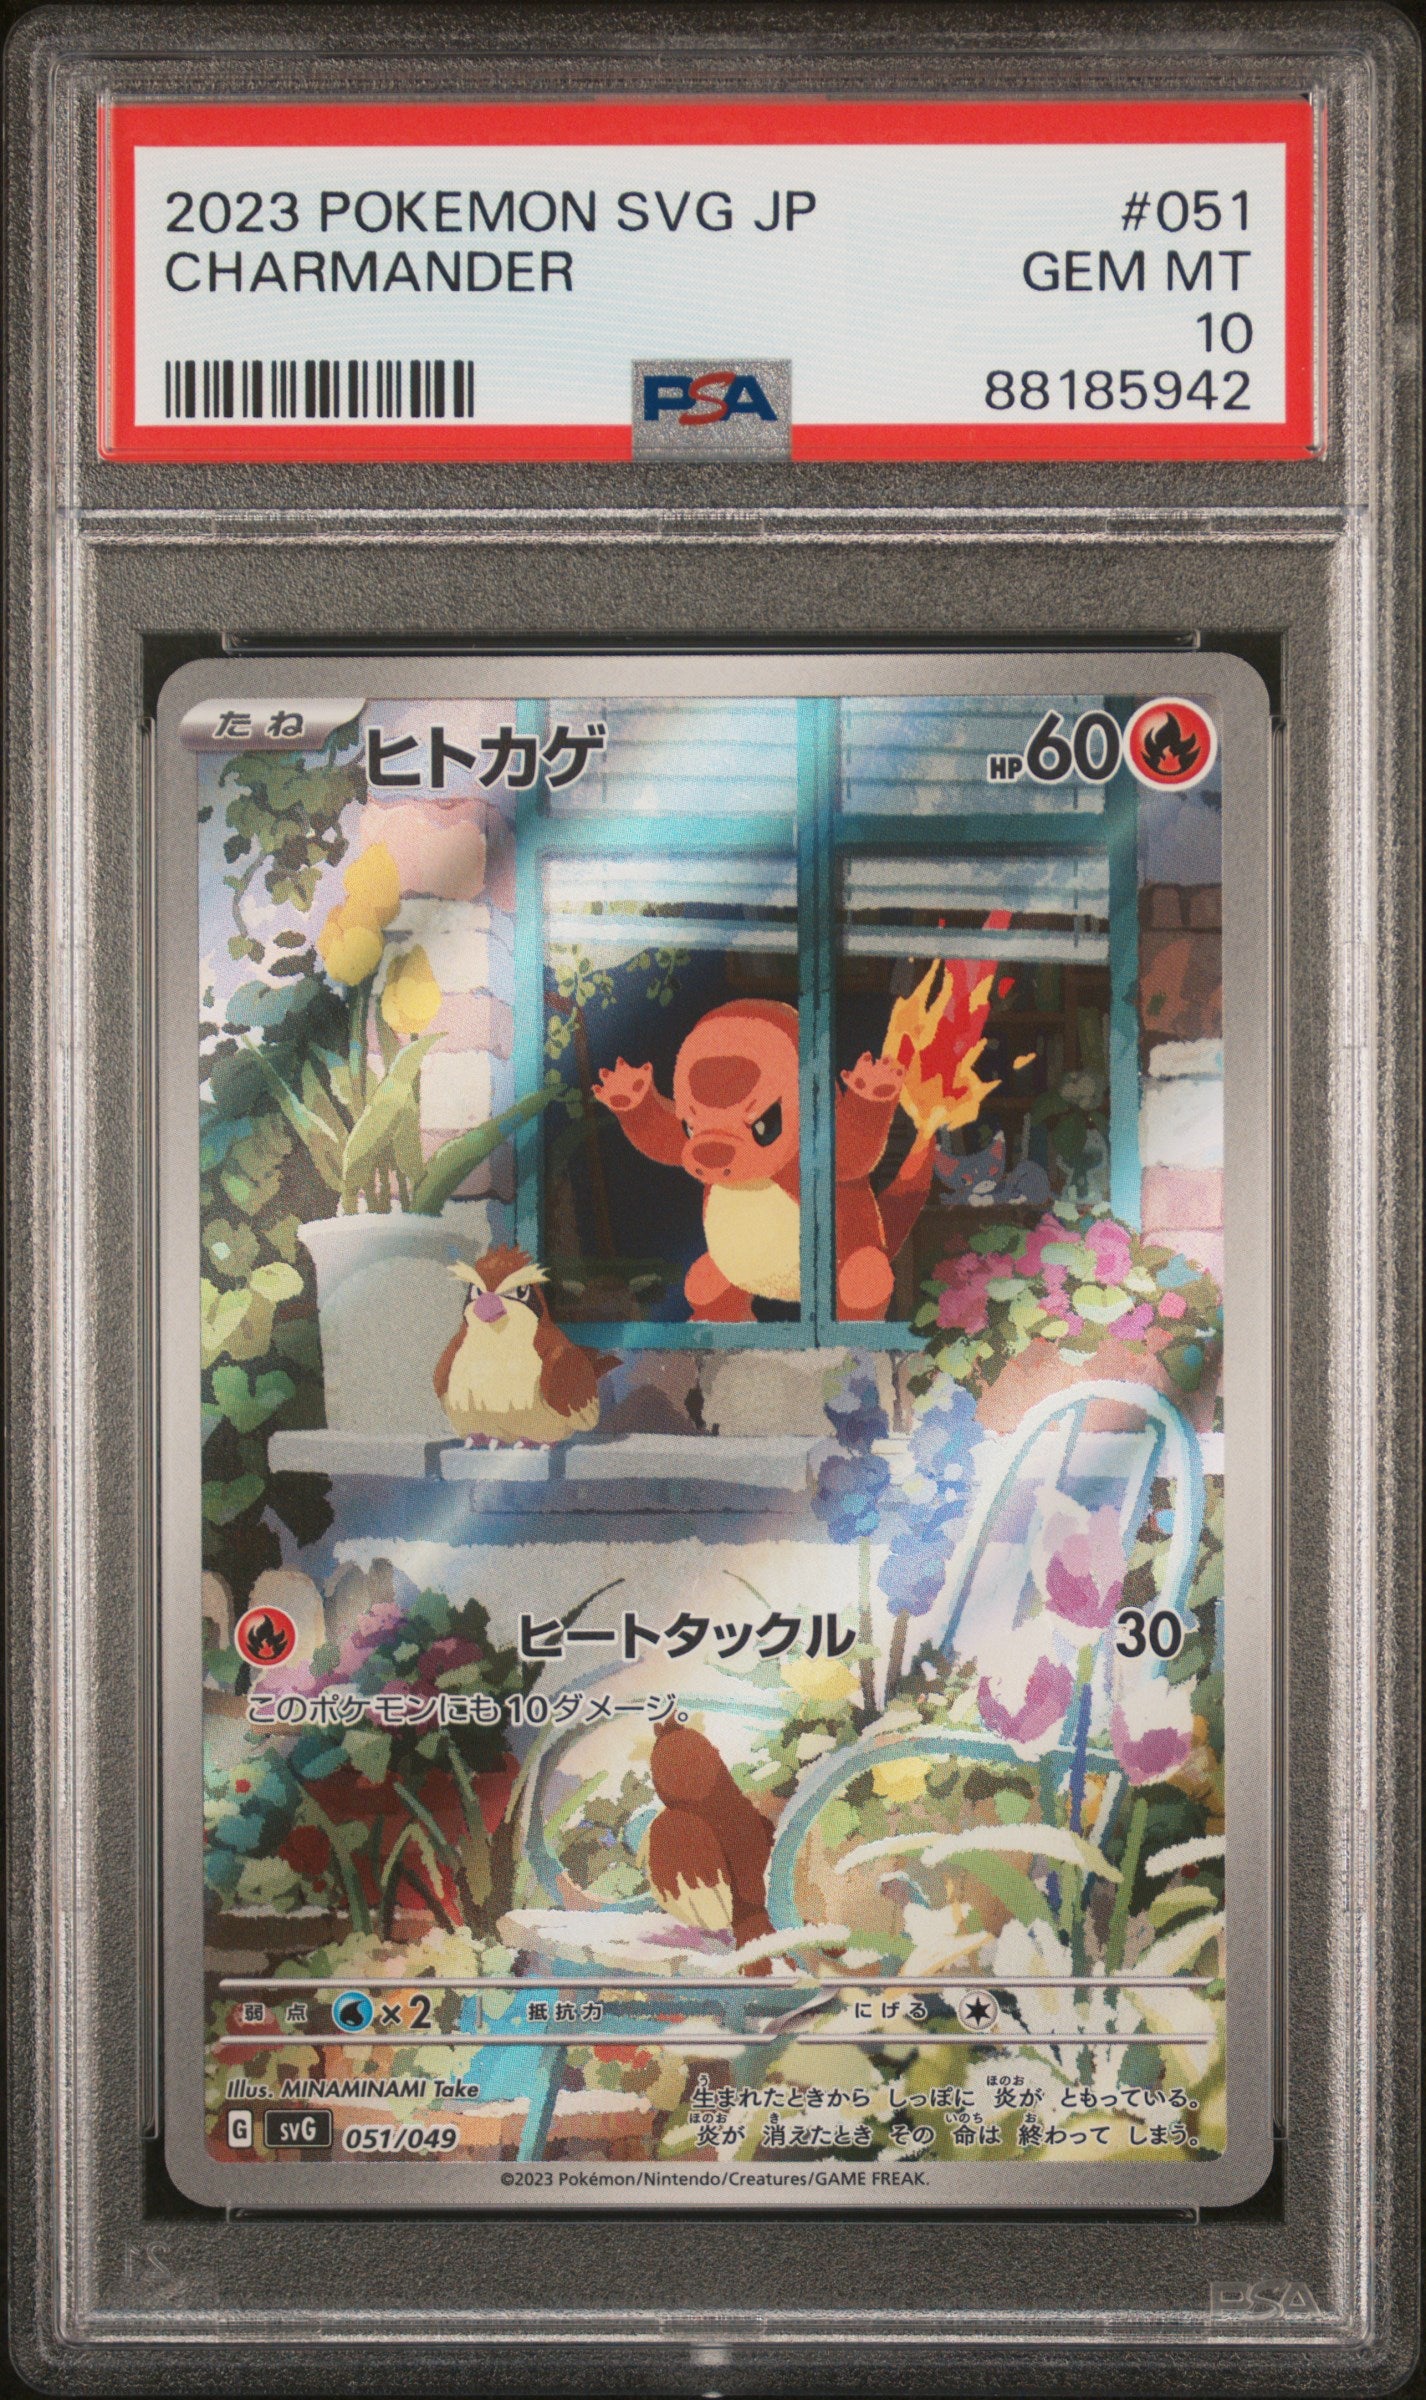 Pokémon Japanese - Charmander SVG 051/049 (Art Rare) - PSA 10 (GEM MINT)